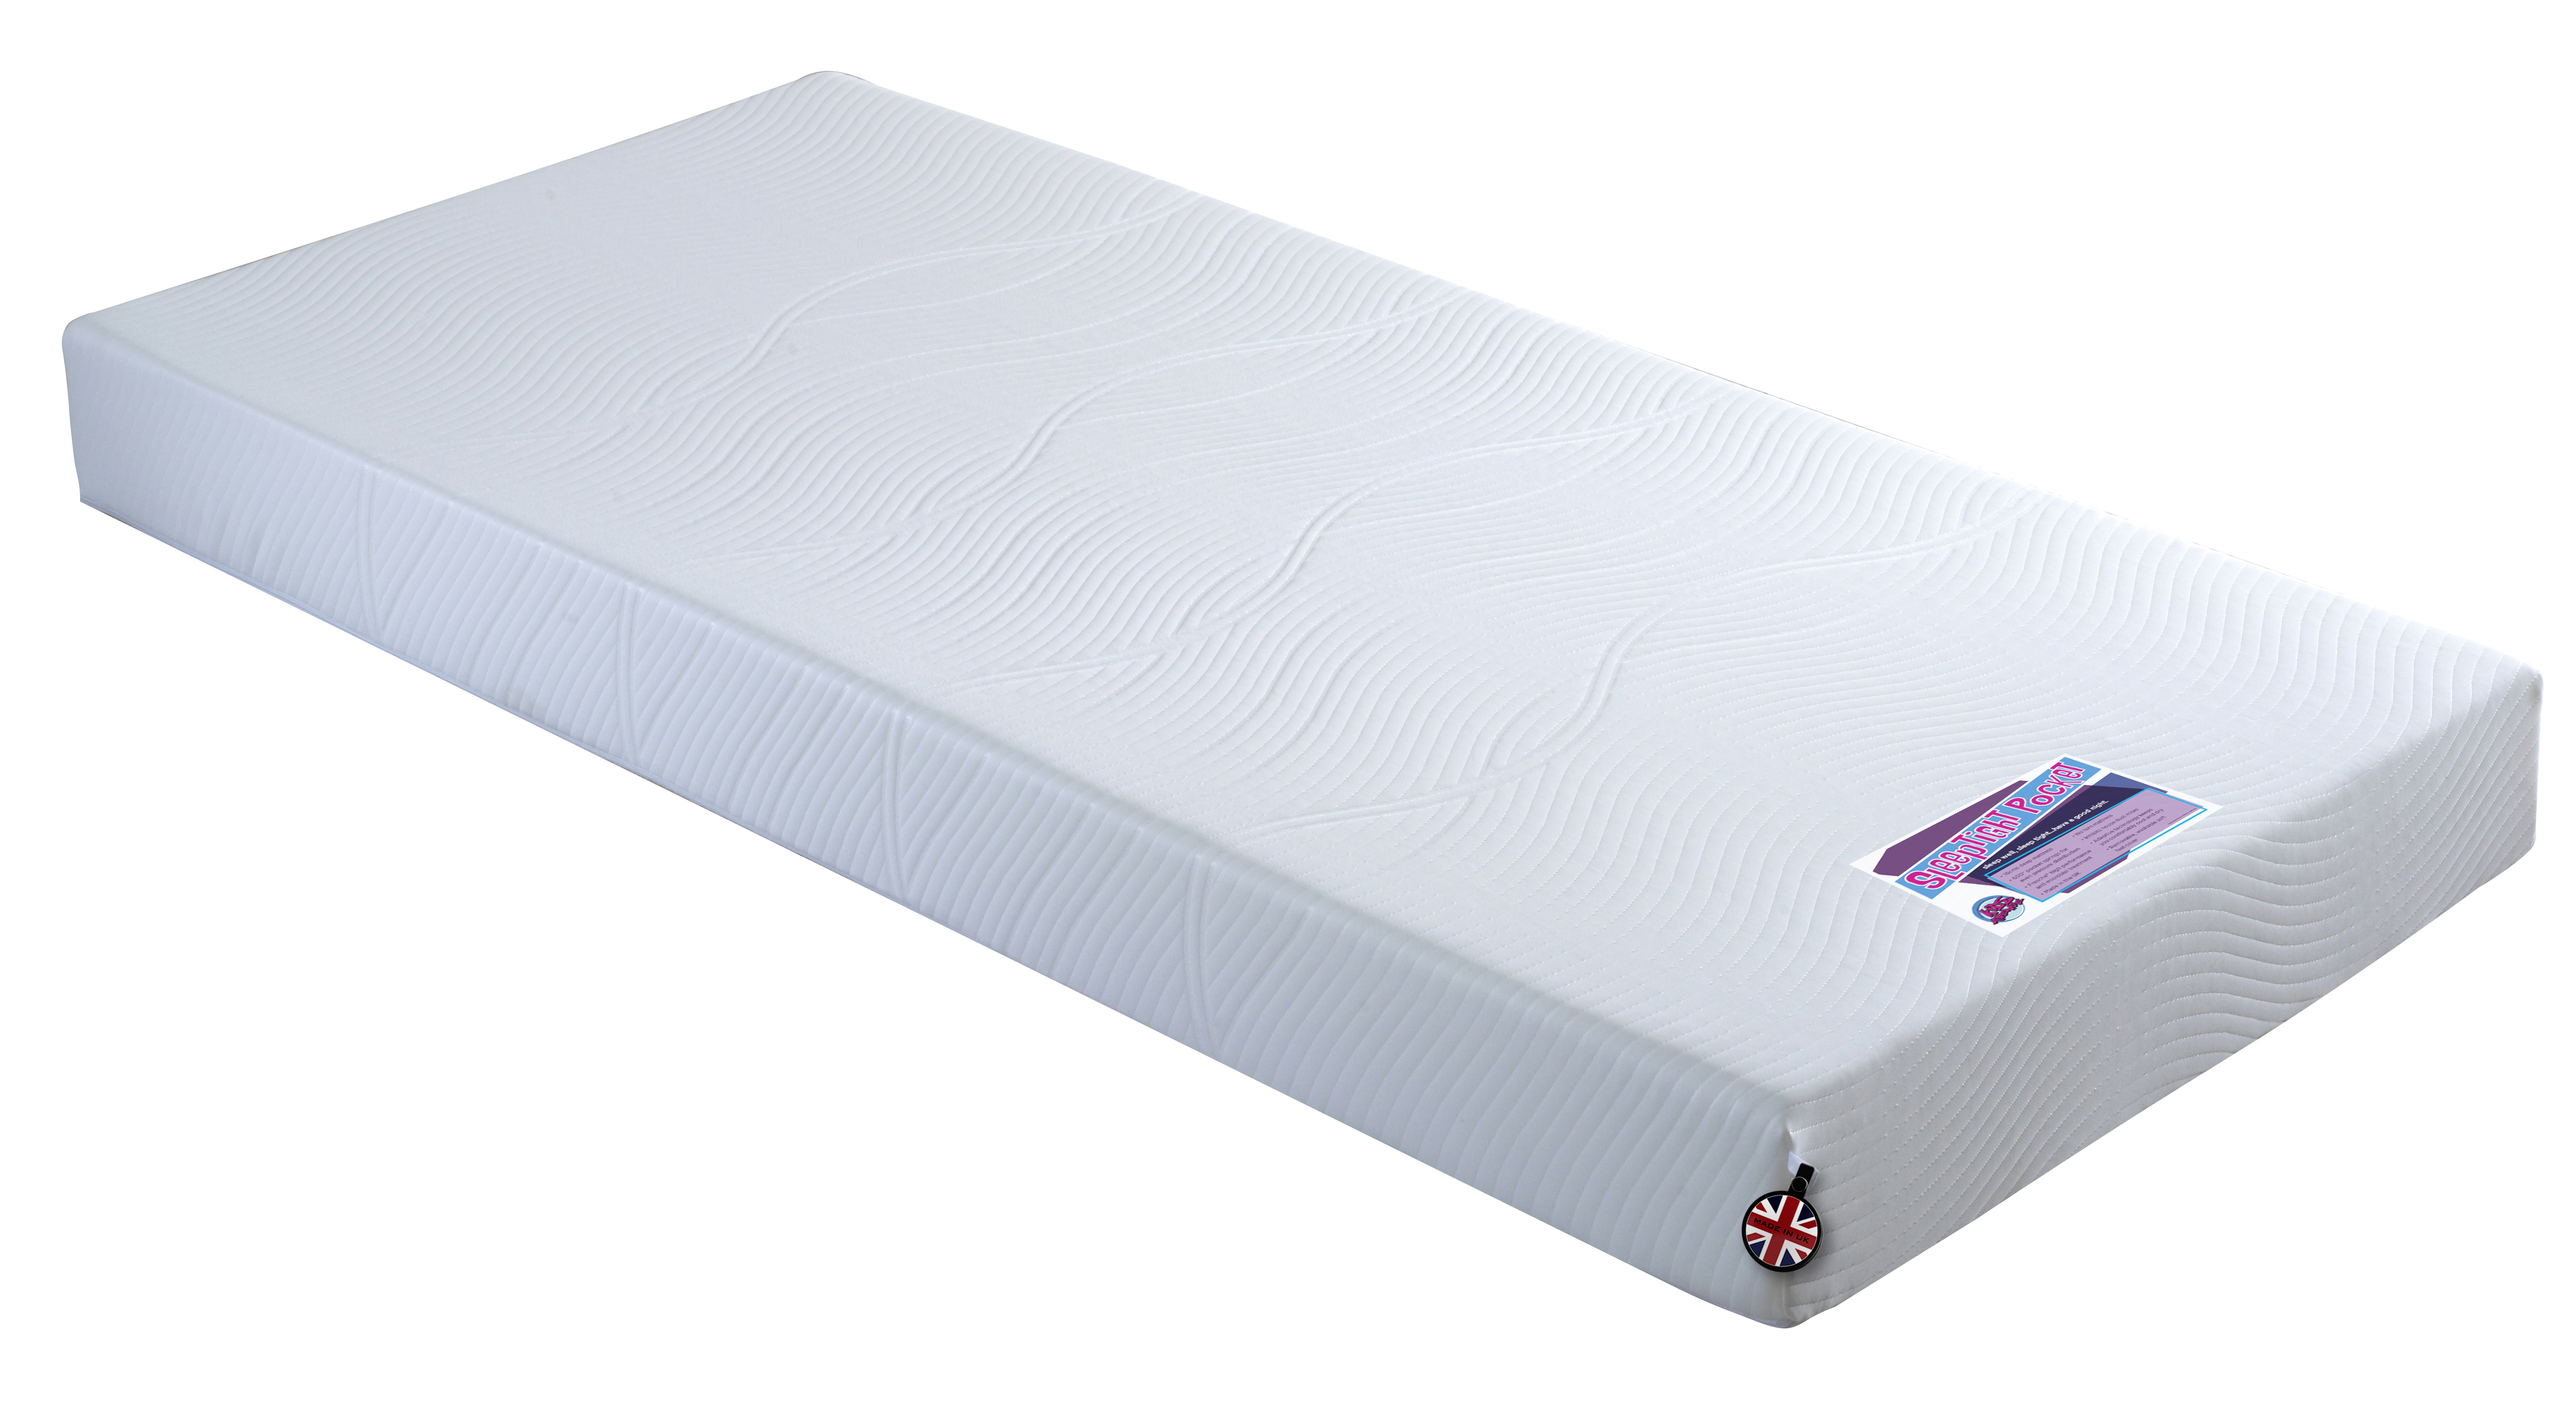 sleeptight double mattress review